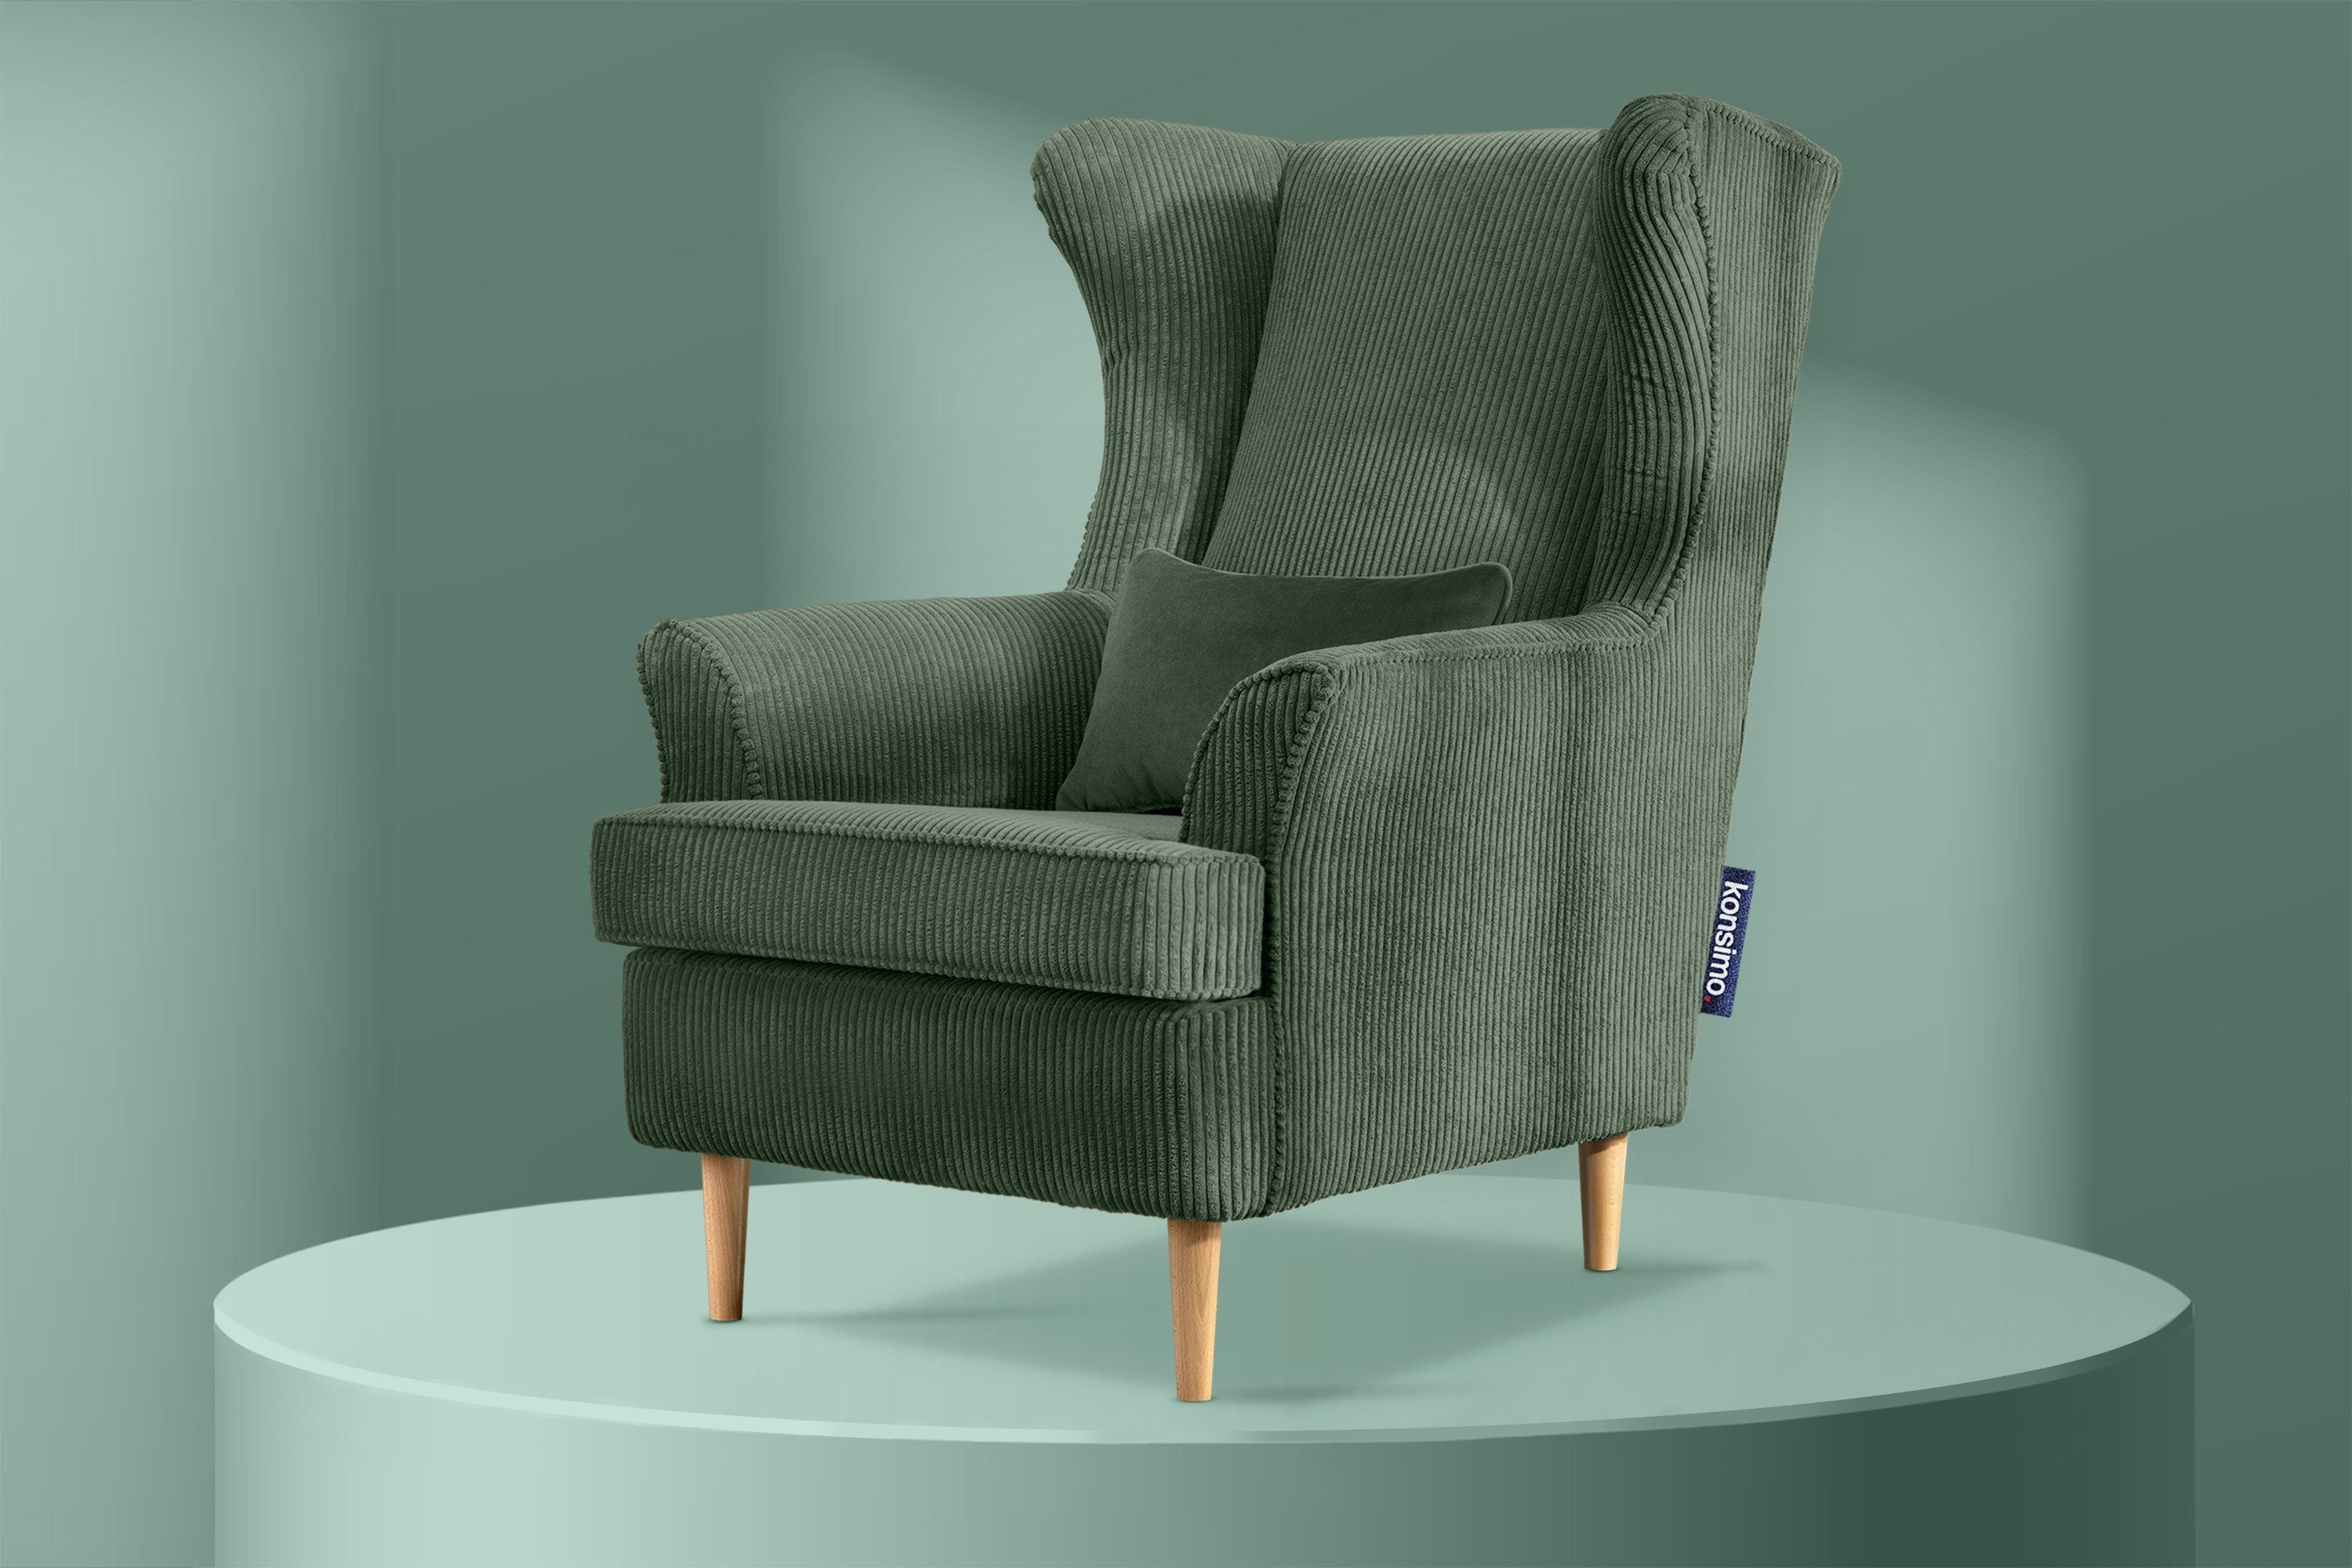 Konsimo Ohrensessel Sessel, Design, STRALIS dekorativem zeitloses Füße, hohe inklusive Kissen